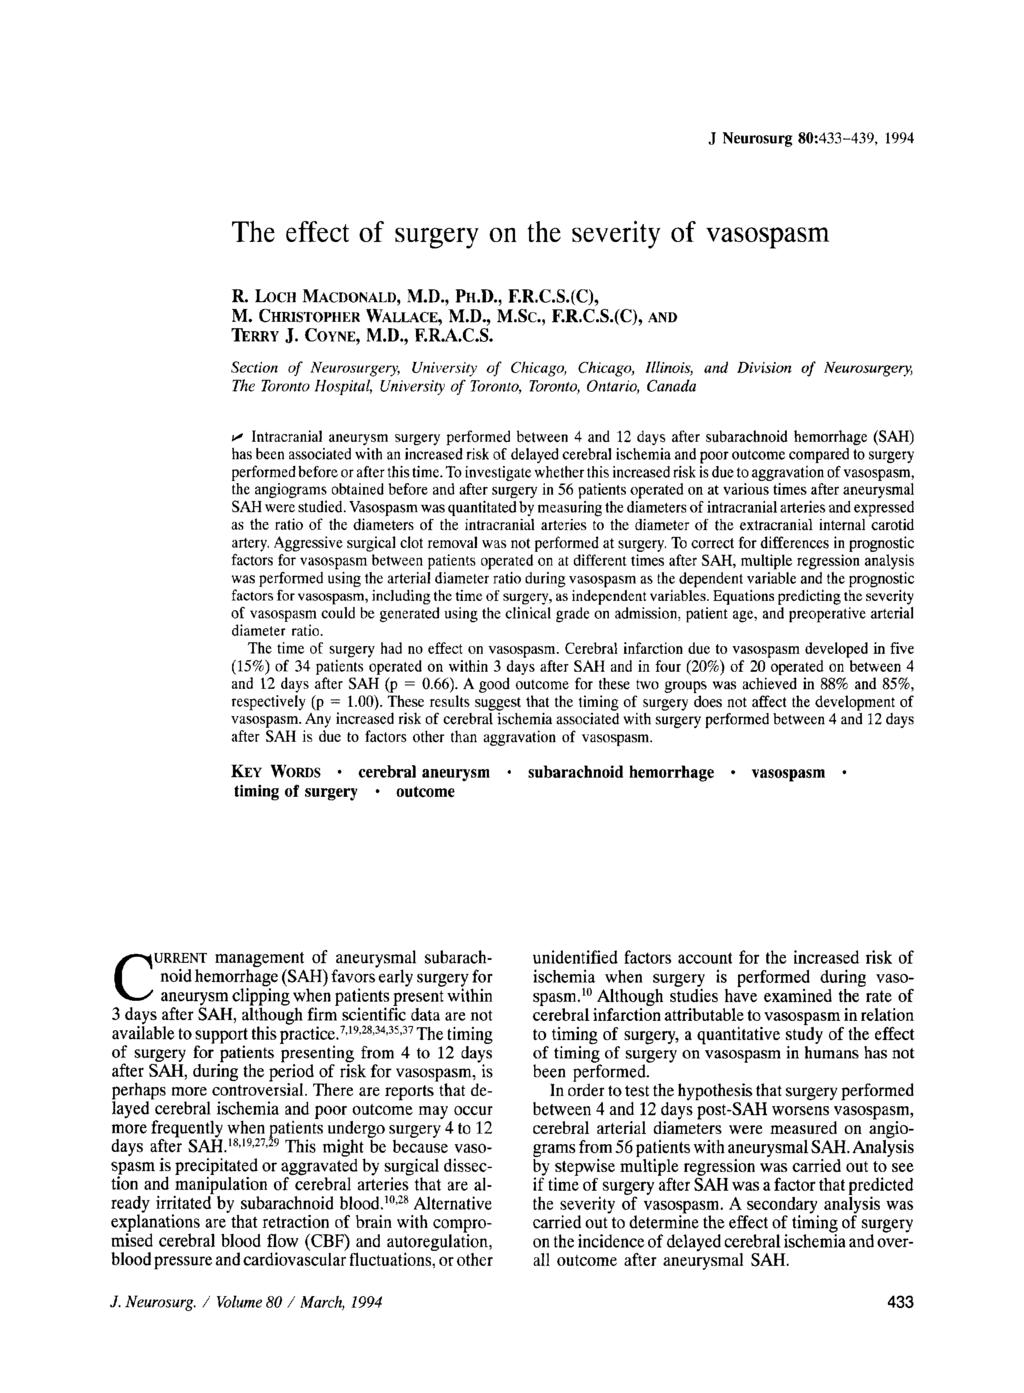 J Neurosurg 80:433-439, 1994 The effect of surgery on the severity of vasospasm R. Locn MACDONALD, M.D., PH.D., ER.C.S.